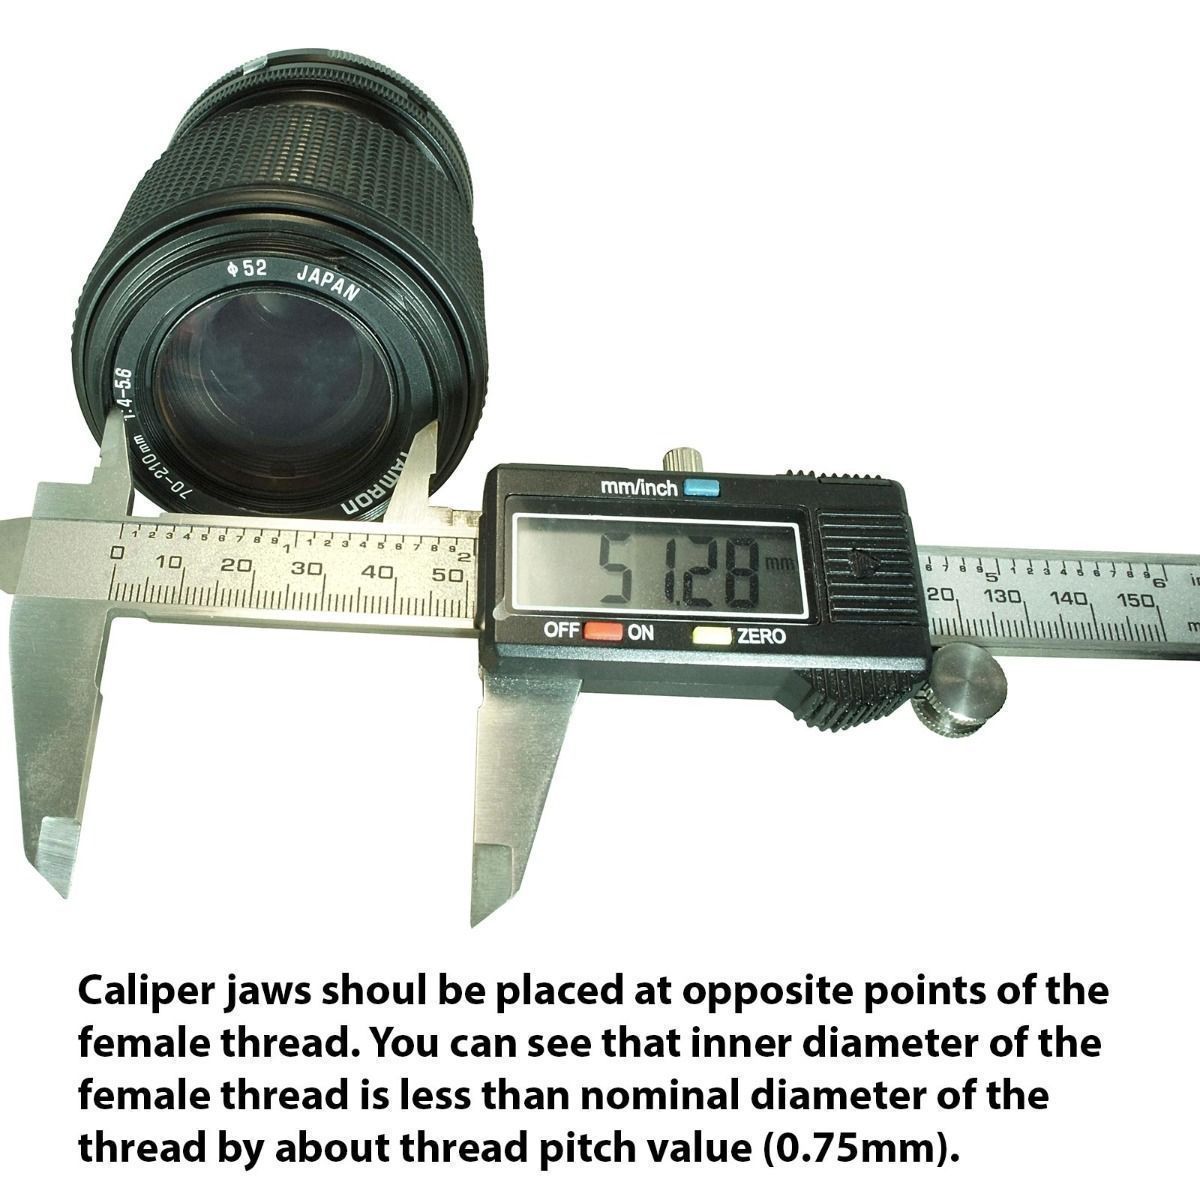 Measuring internal thread with digital caliper